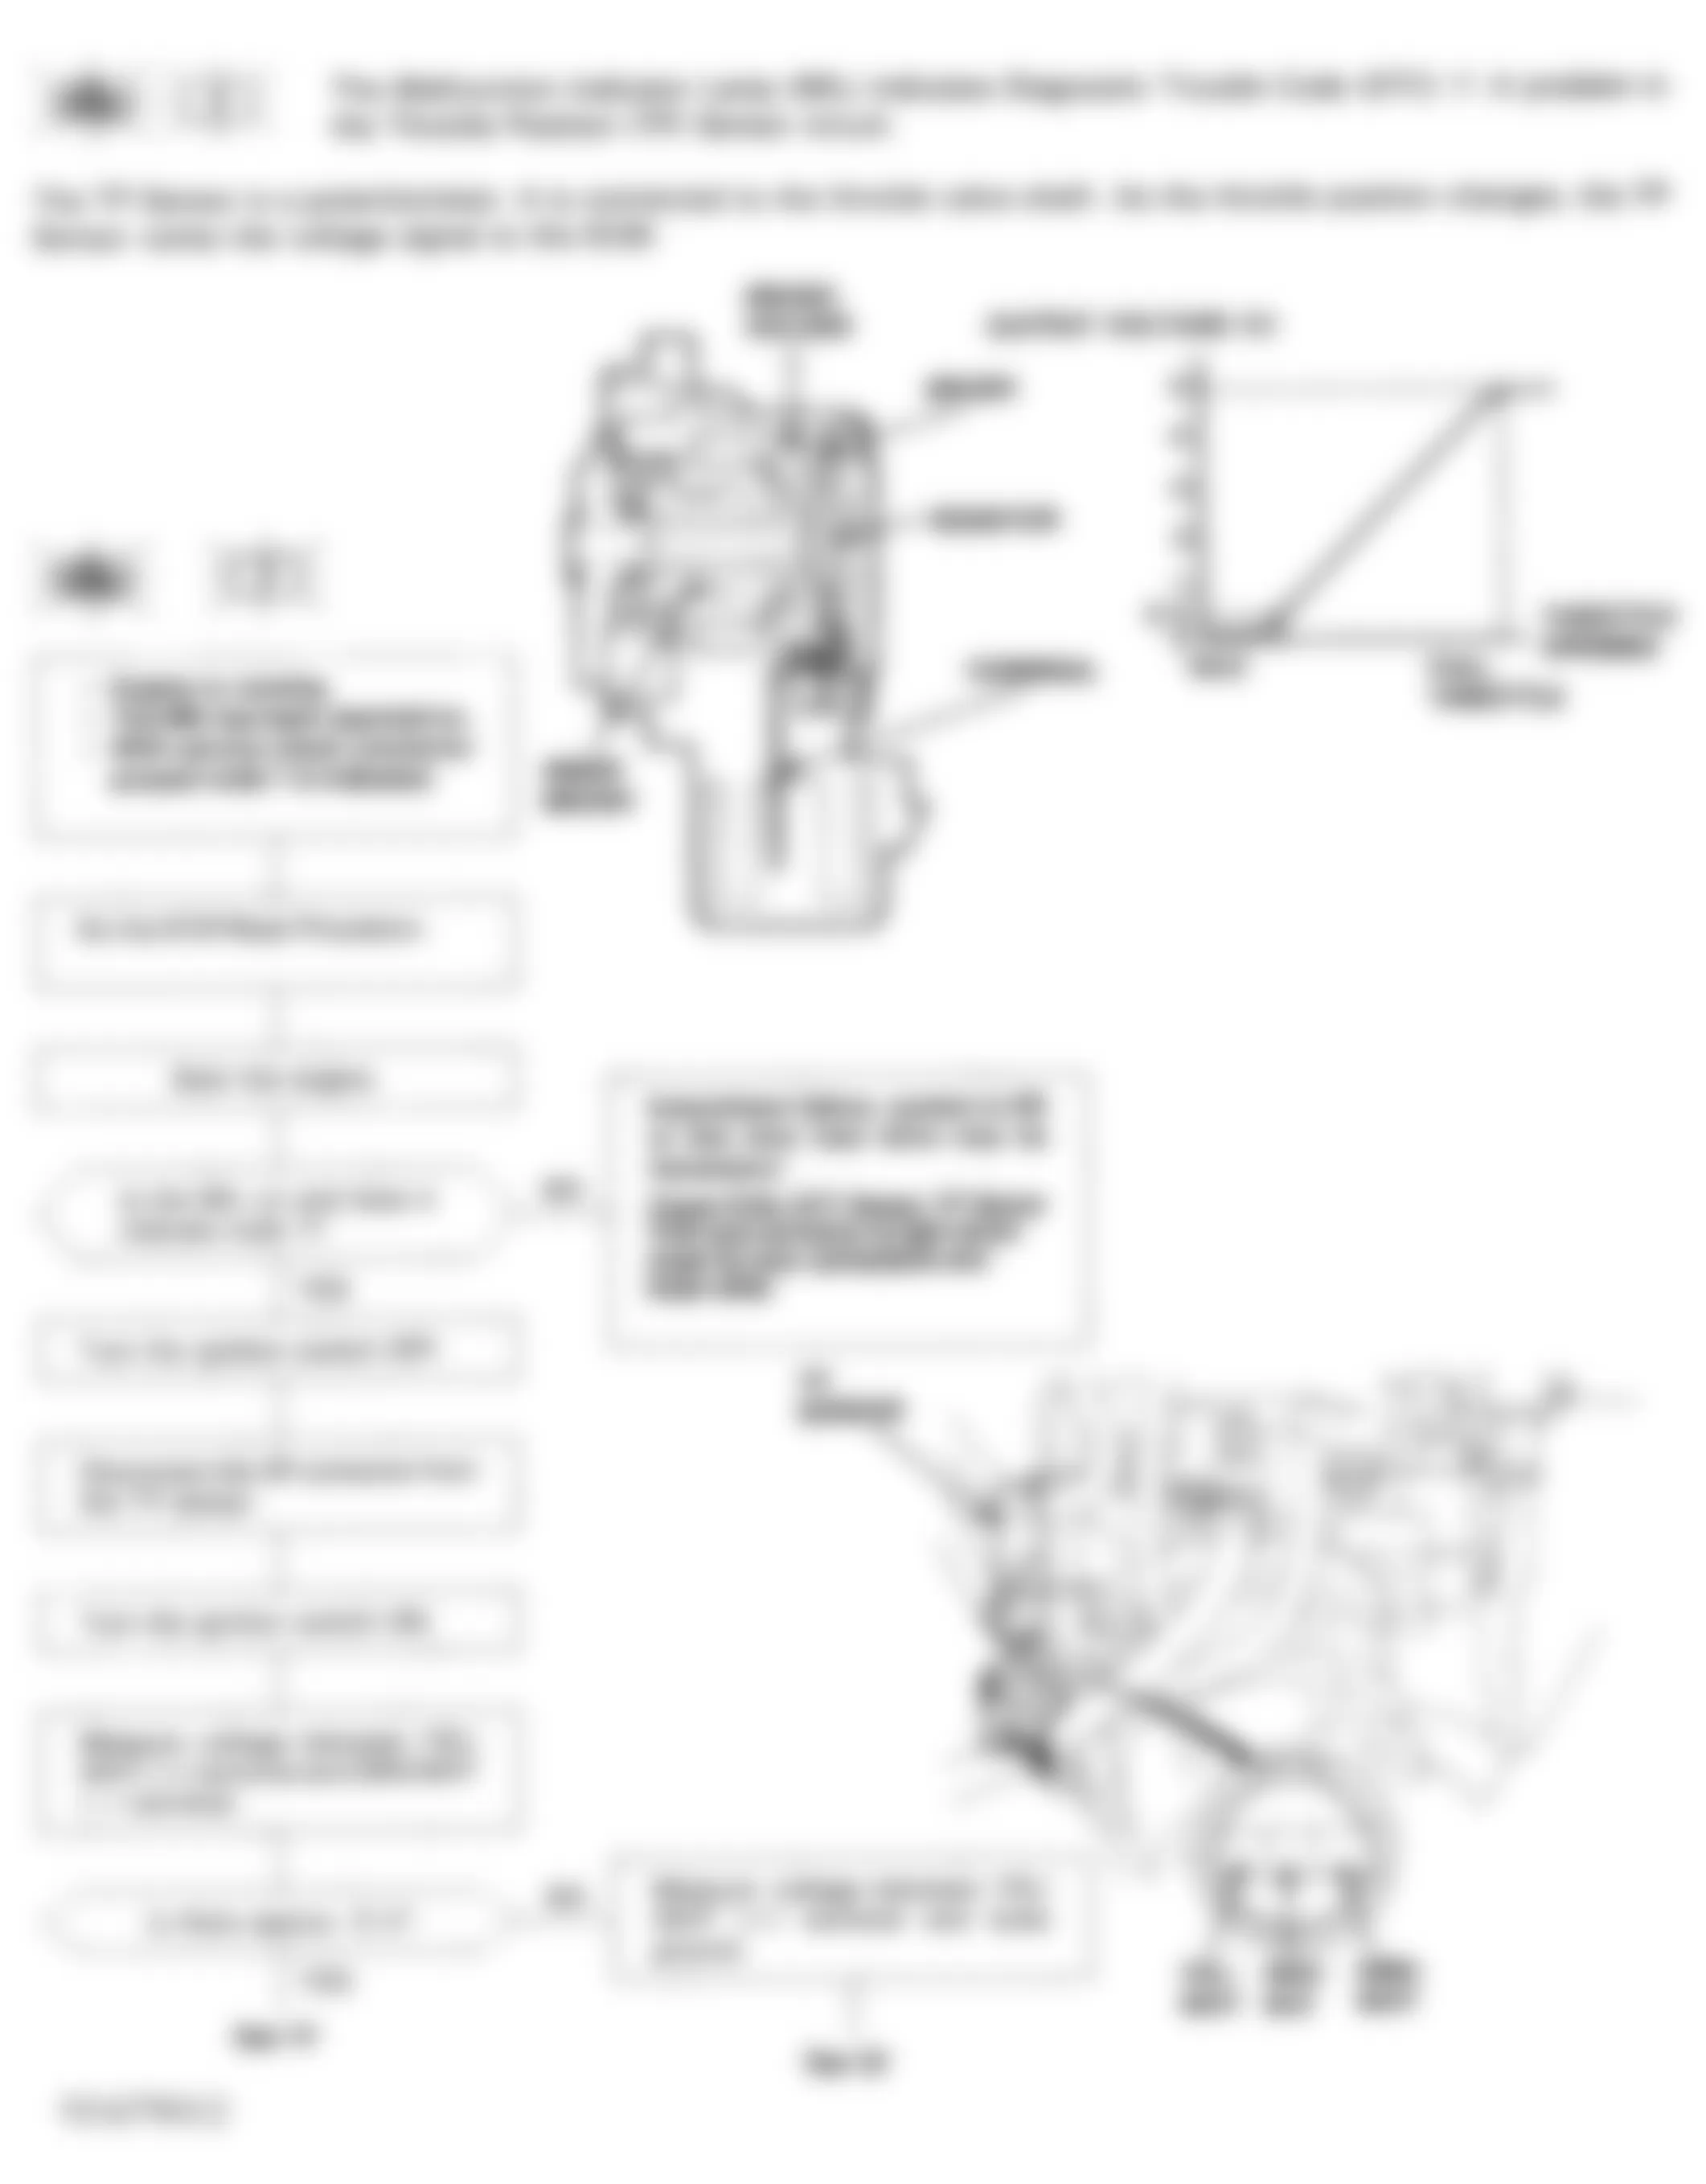 Honda Prelude VTEC 1993 - Component Locations -  Code 7 Flowchart, Throttle Position Sensor (1 of 2)